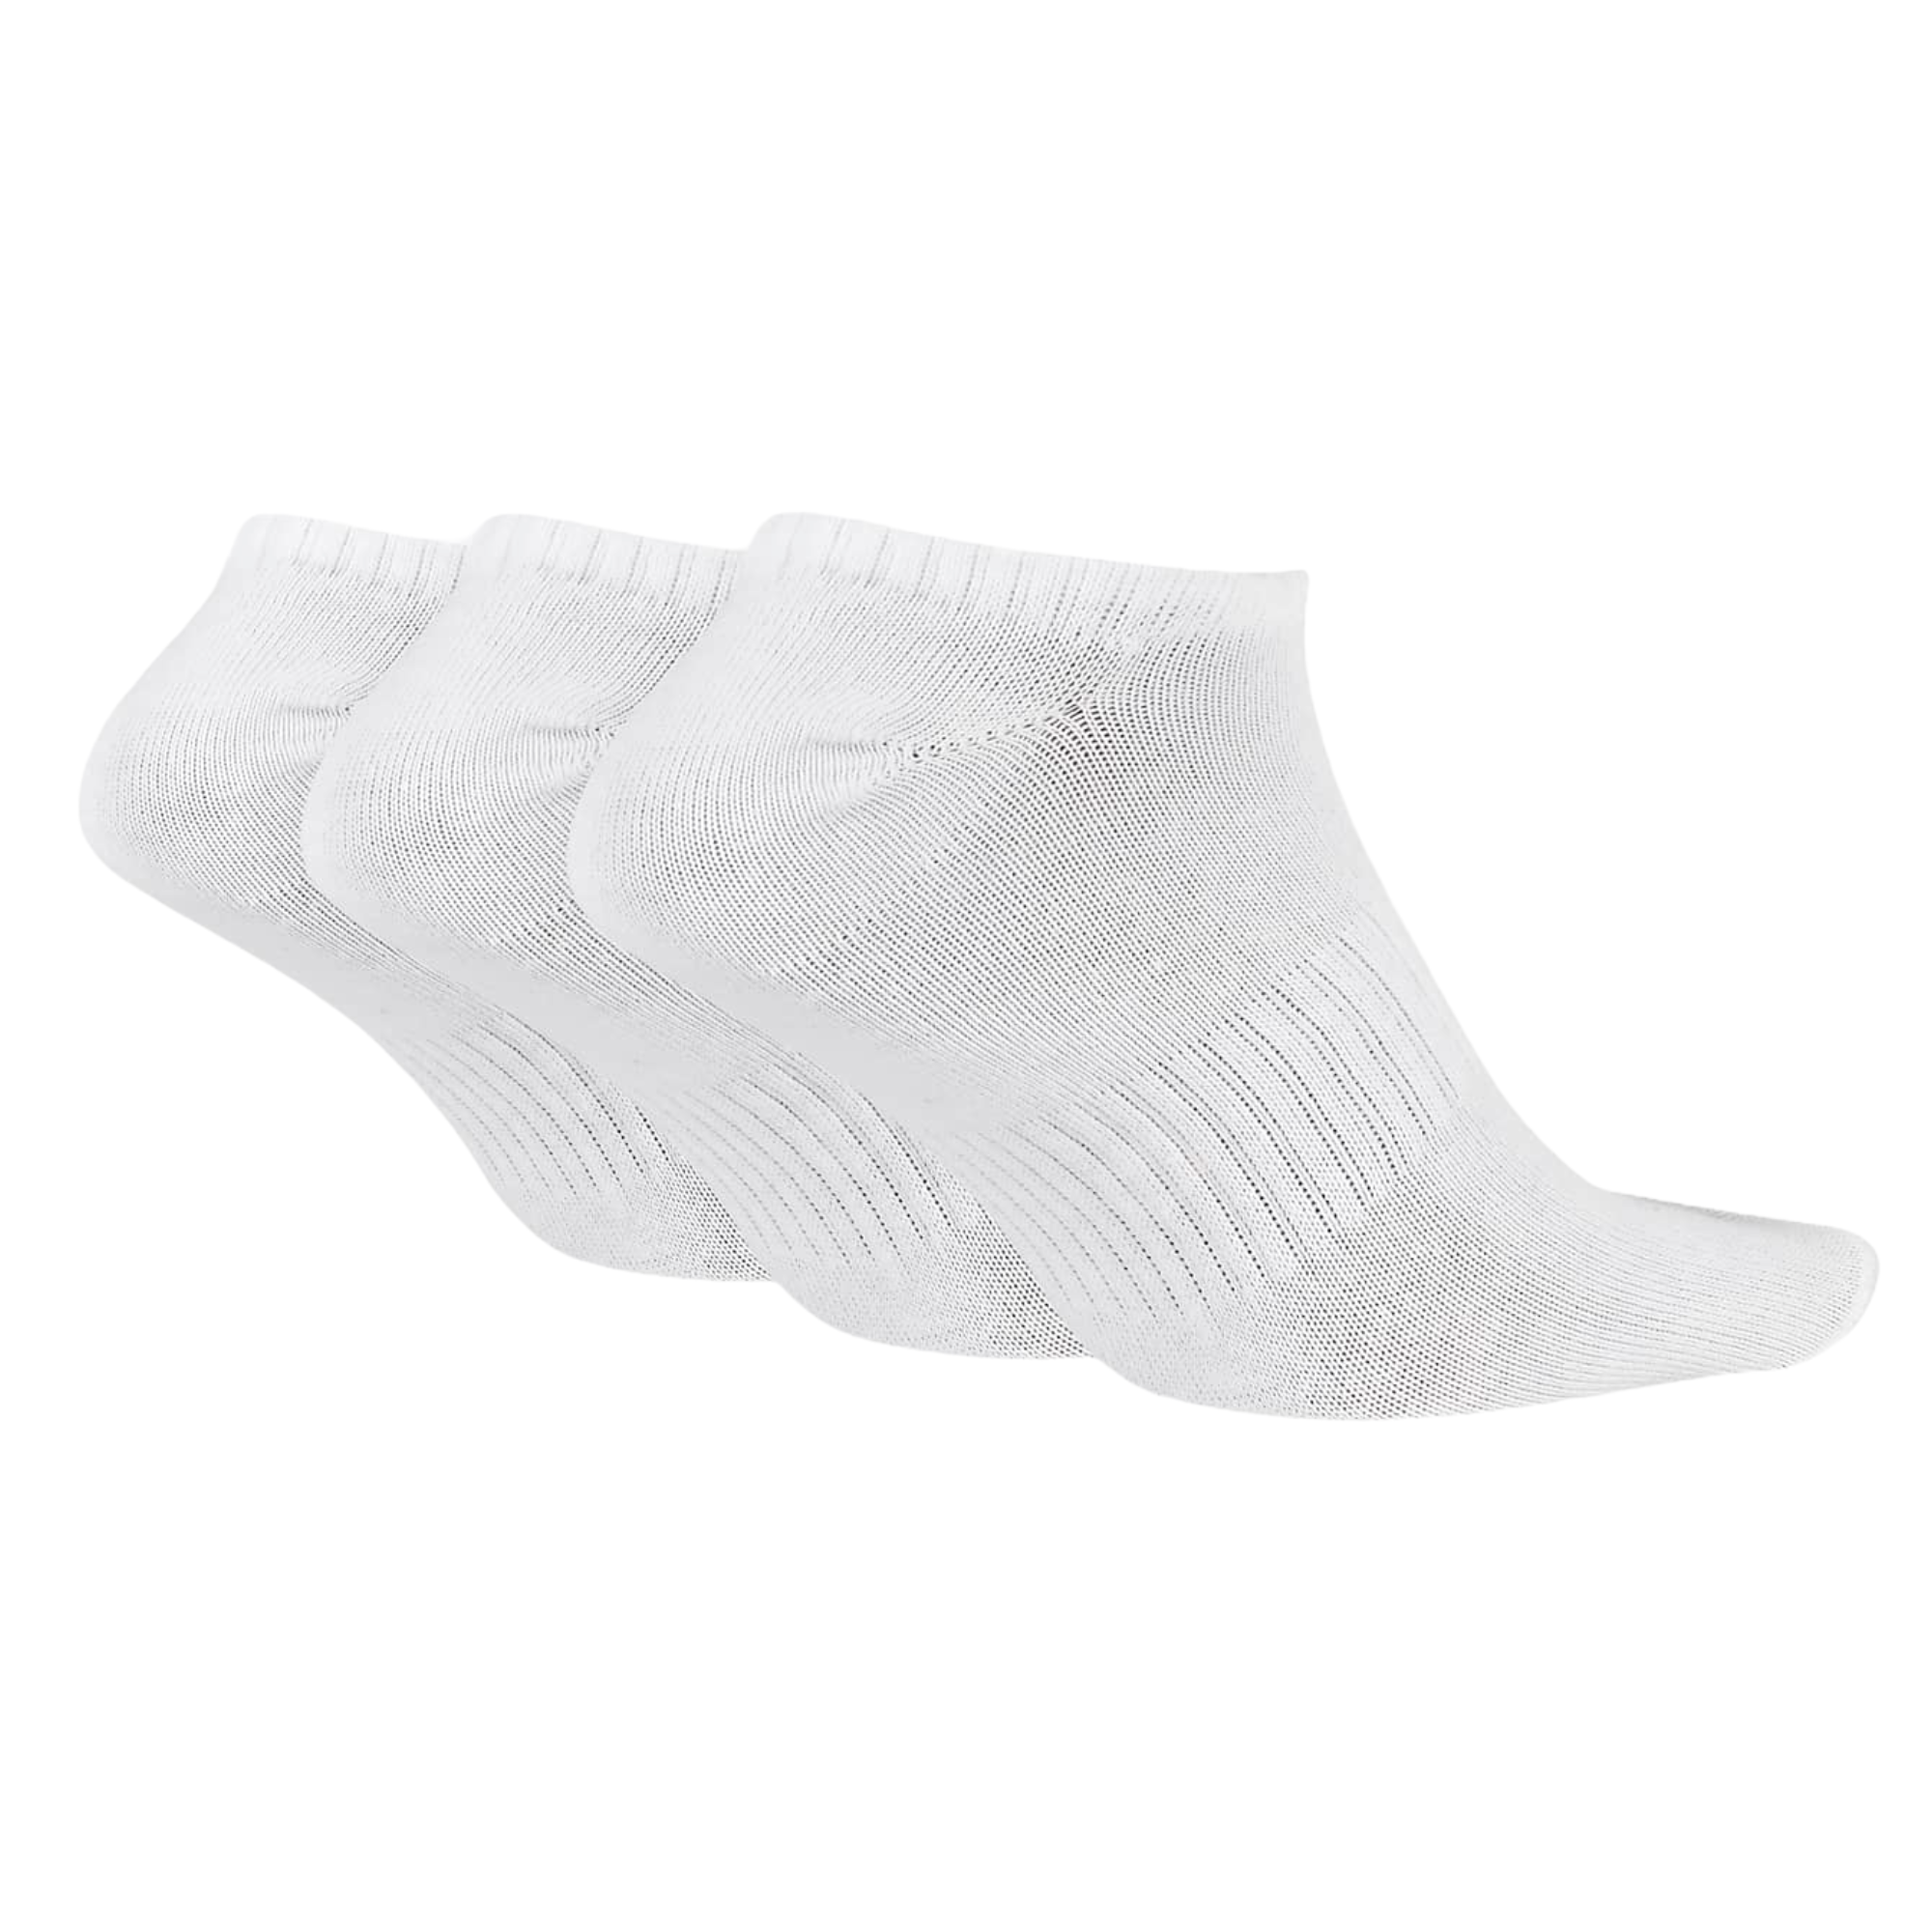 Nike SB Everyday Lightweight No Show Socks (3 Pack) White - Orchard  Skateshop